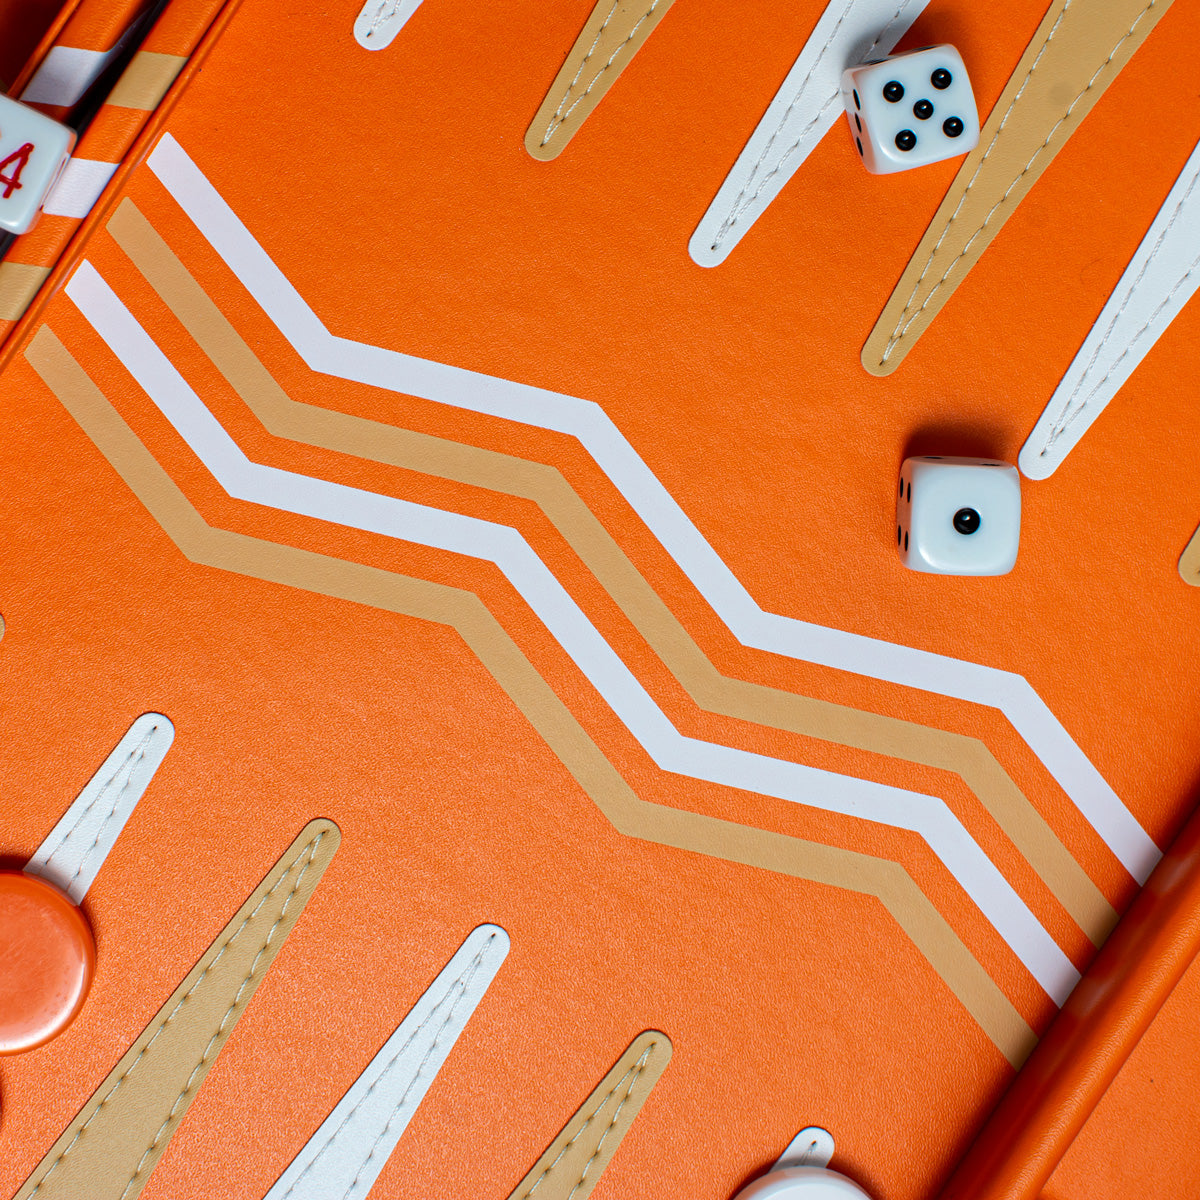 Leather Backgammon Board in Orange